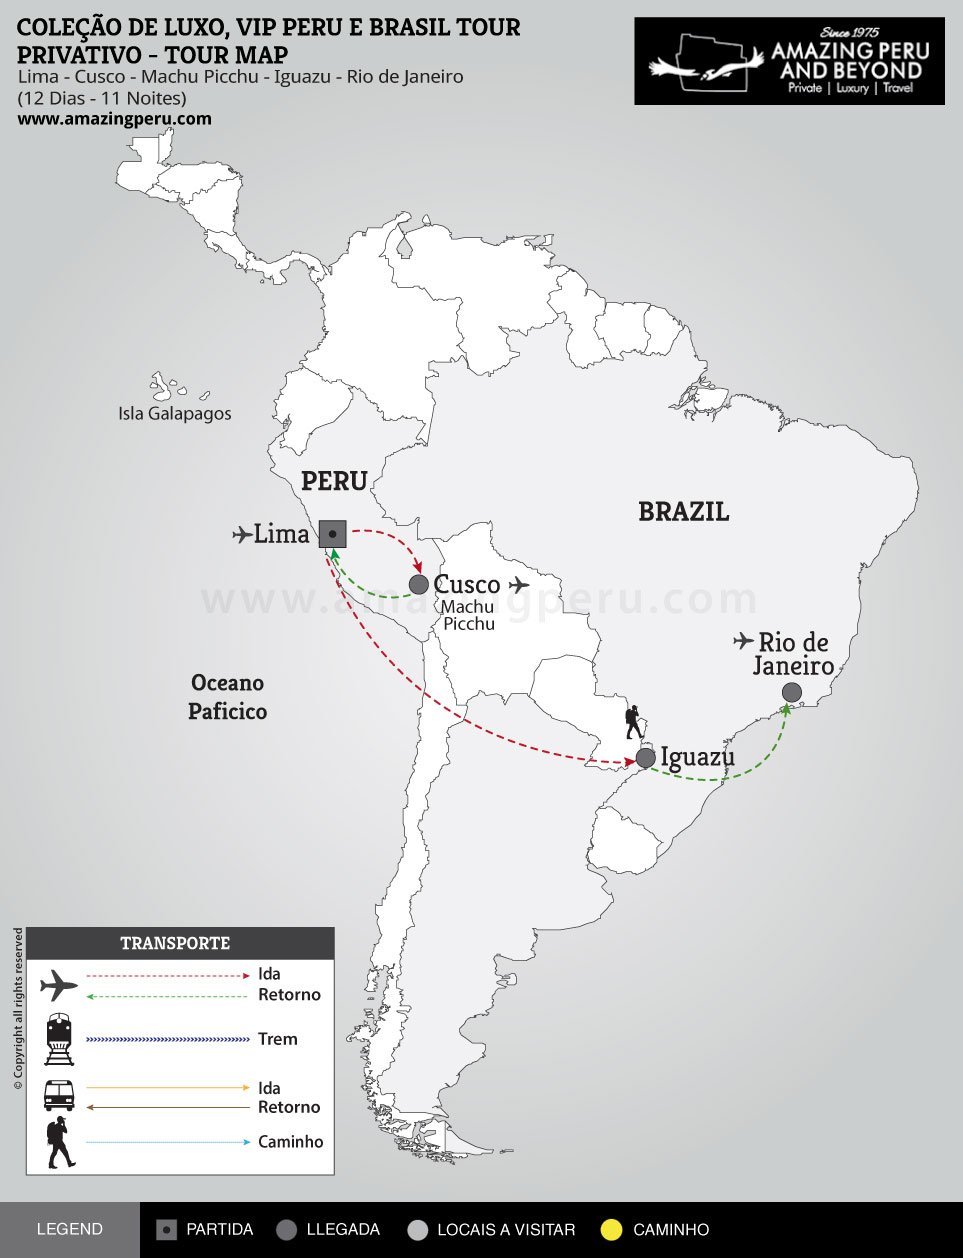 Coleo de Luxo, VIP Peru e Brasil tour Privativo - 12 days / 11 nights.